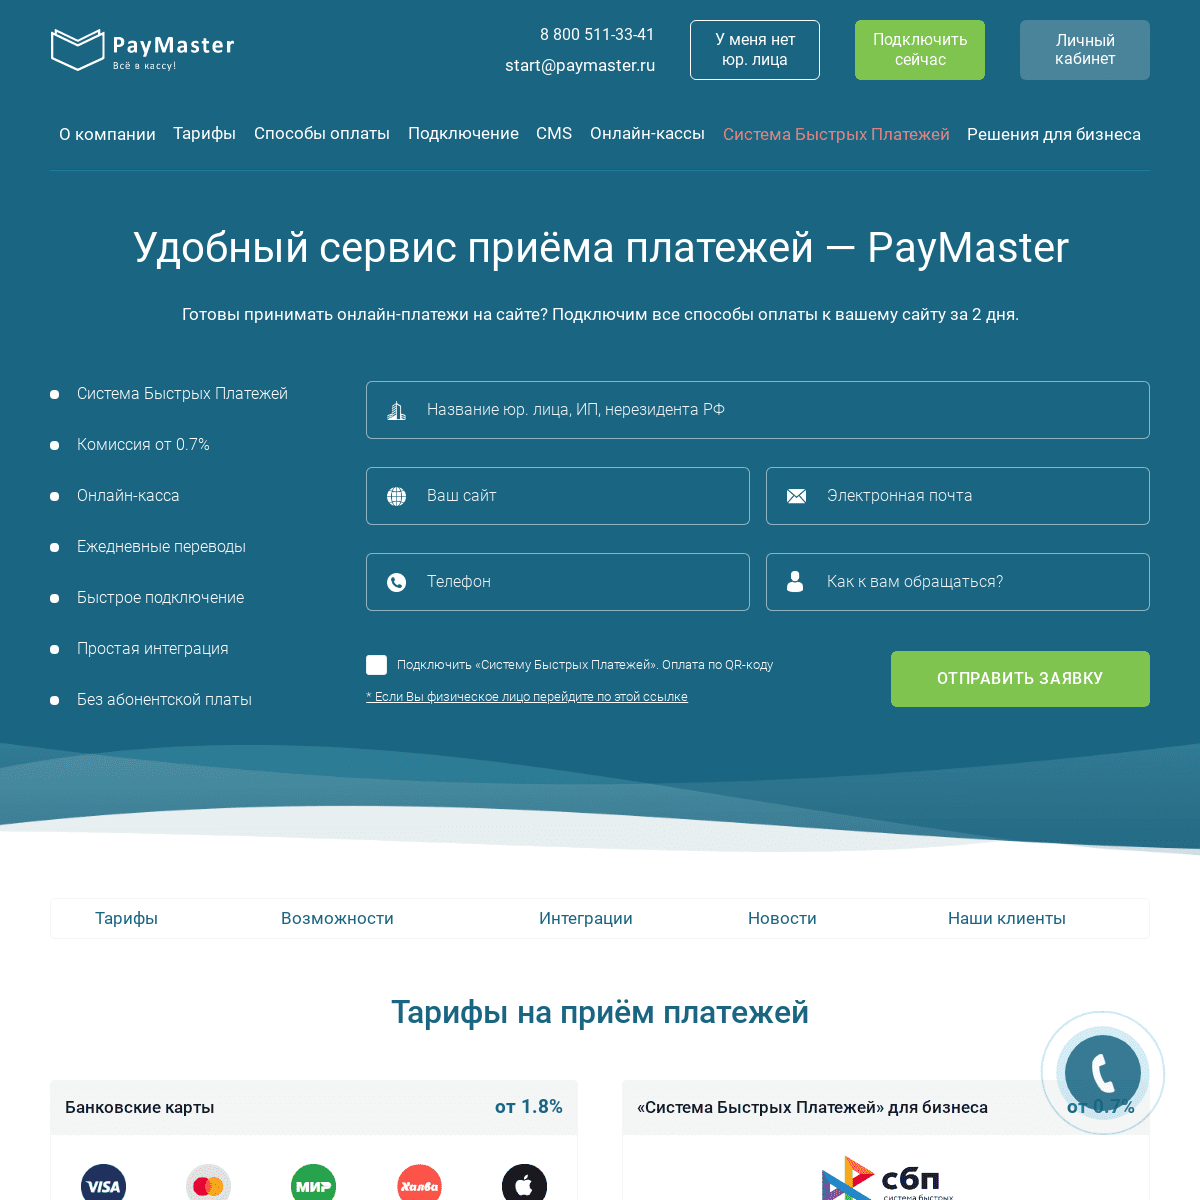 A complete backup of paymaster.ru